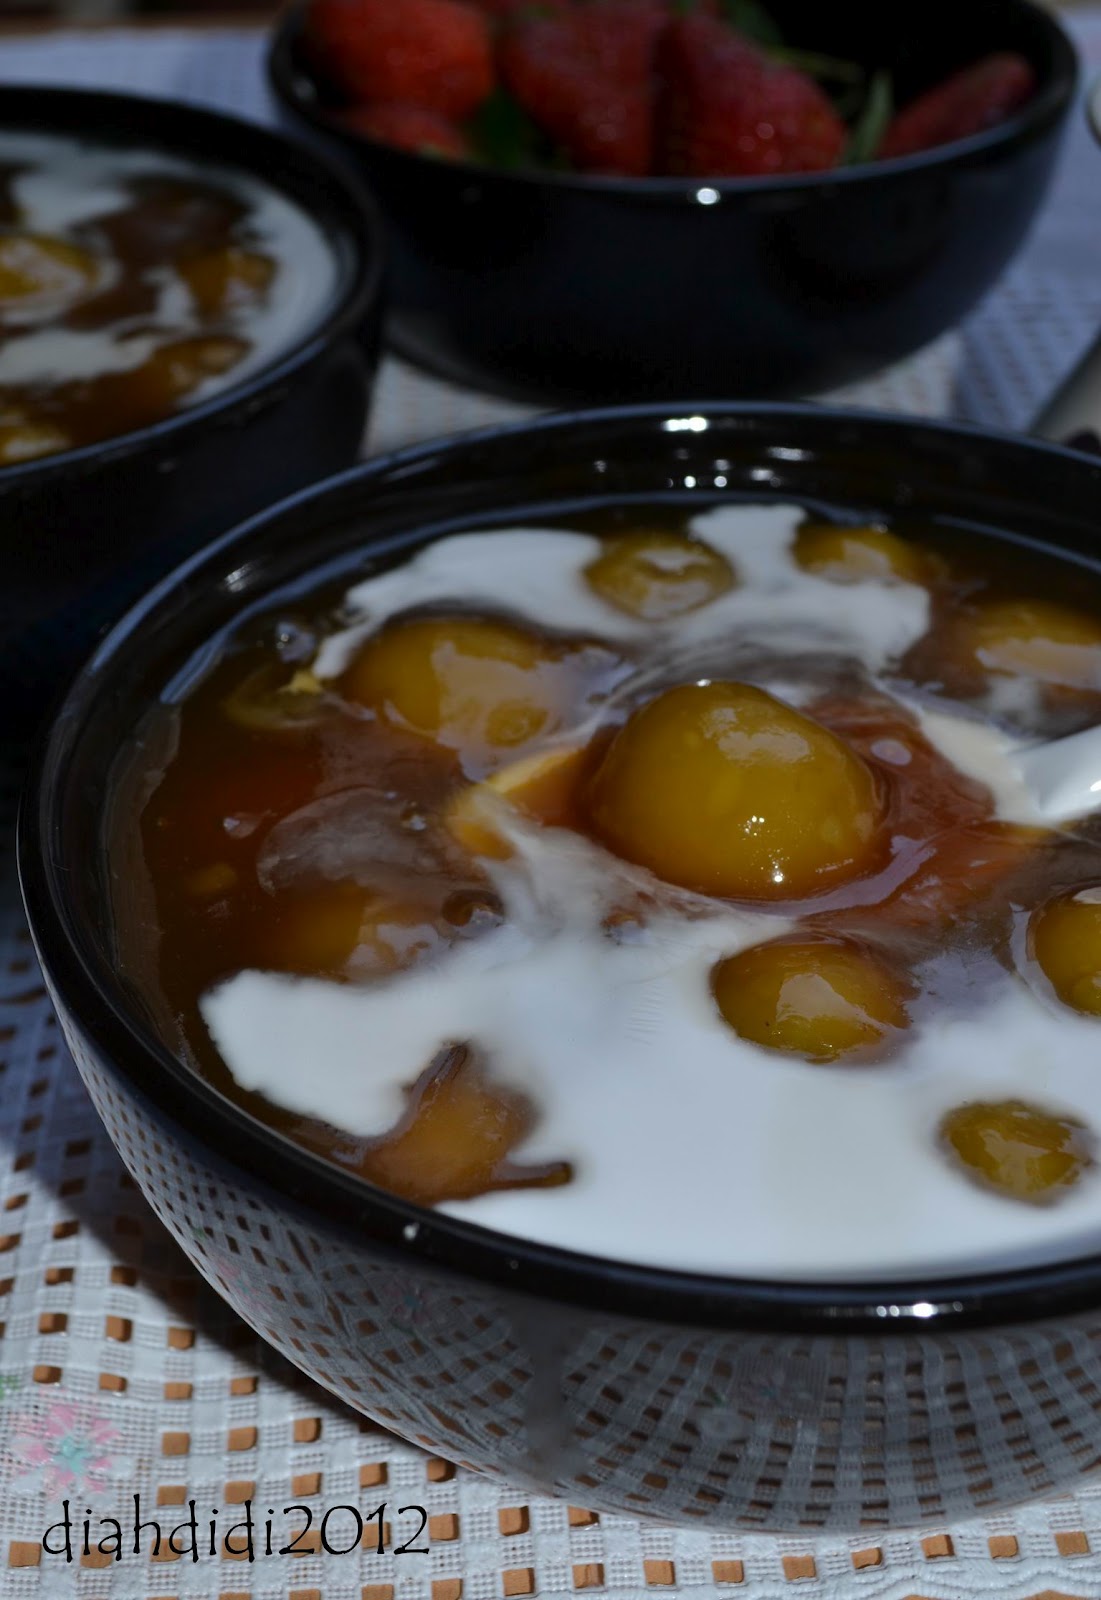 Diah Didi's Kitchen: Bubur candil ubi